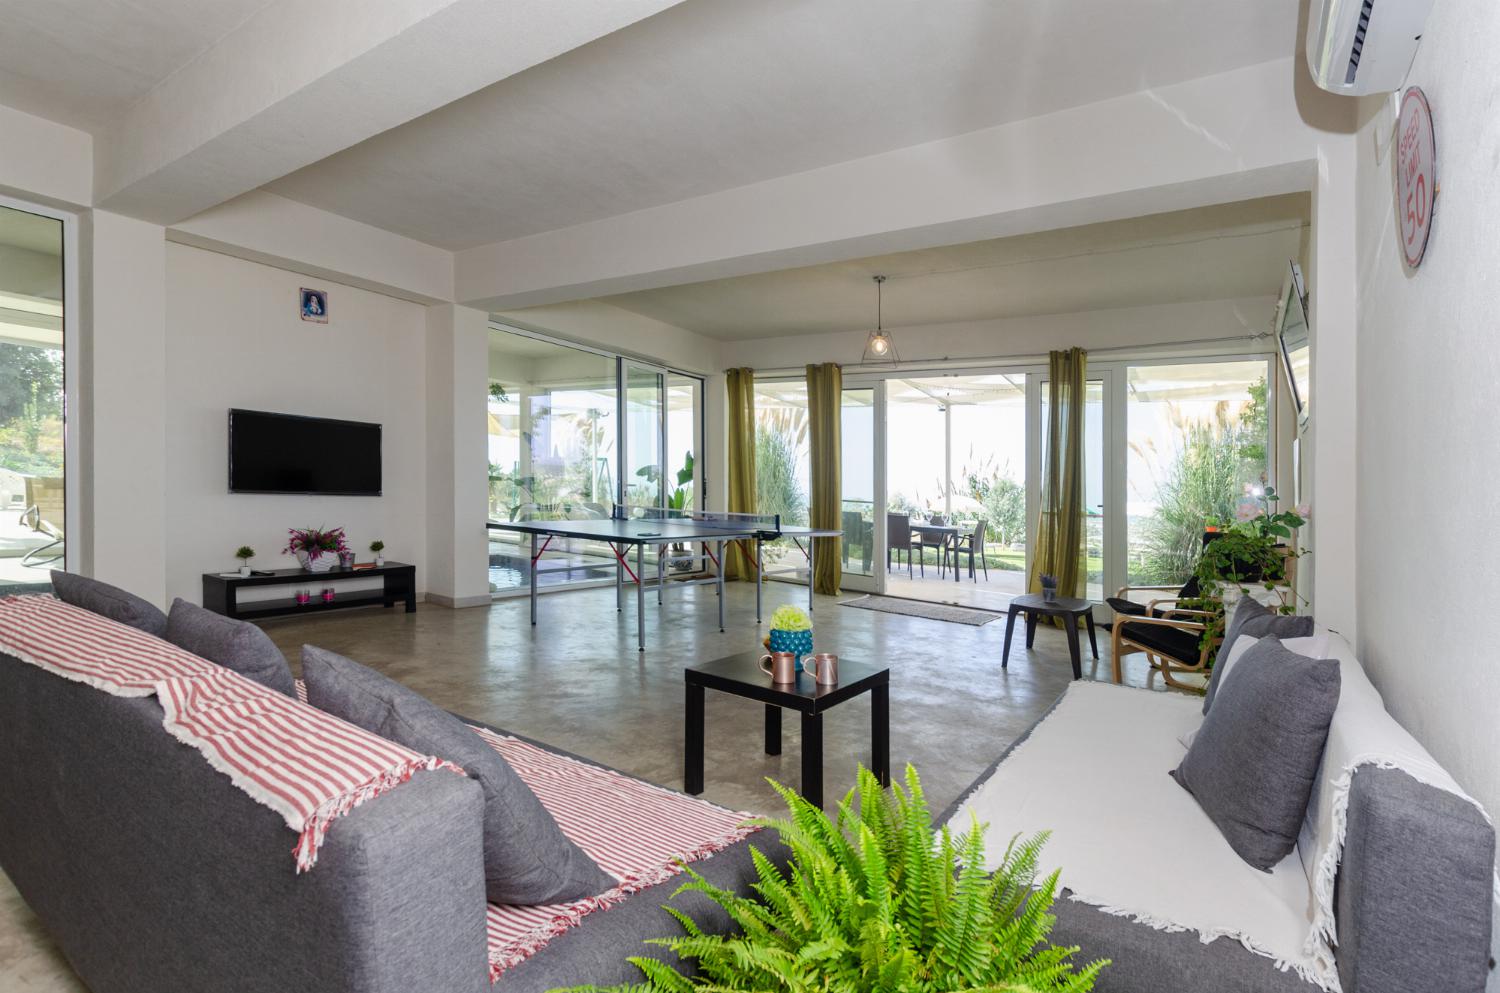 Open plan living room with comfortable sofas, TV, patio doors, AC